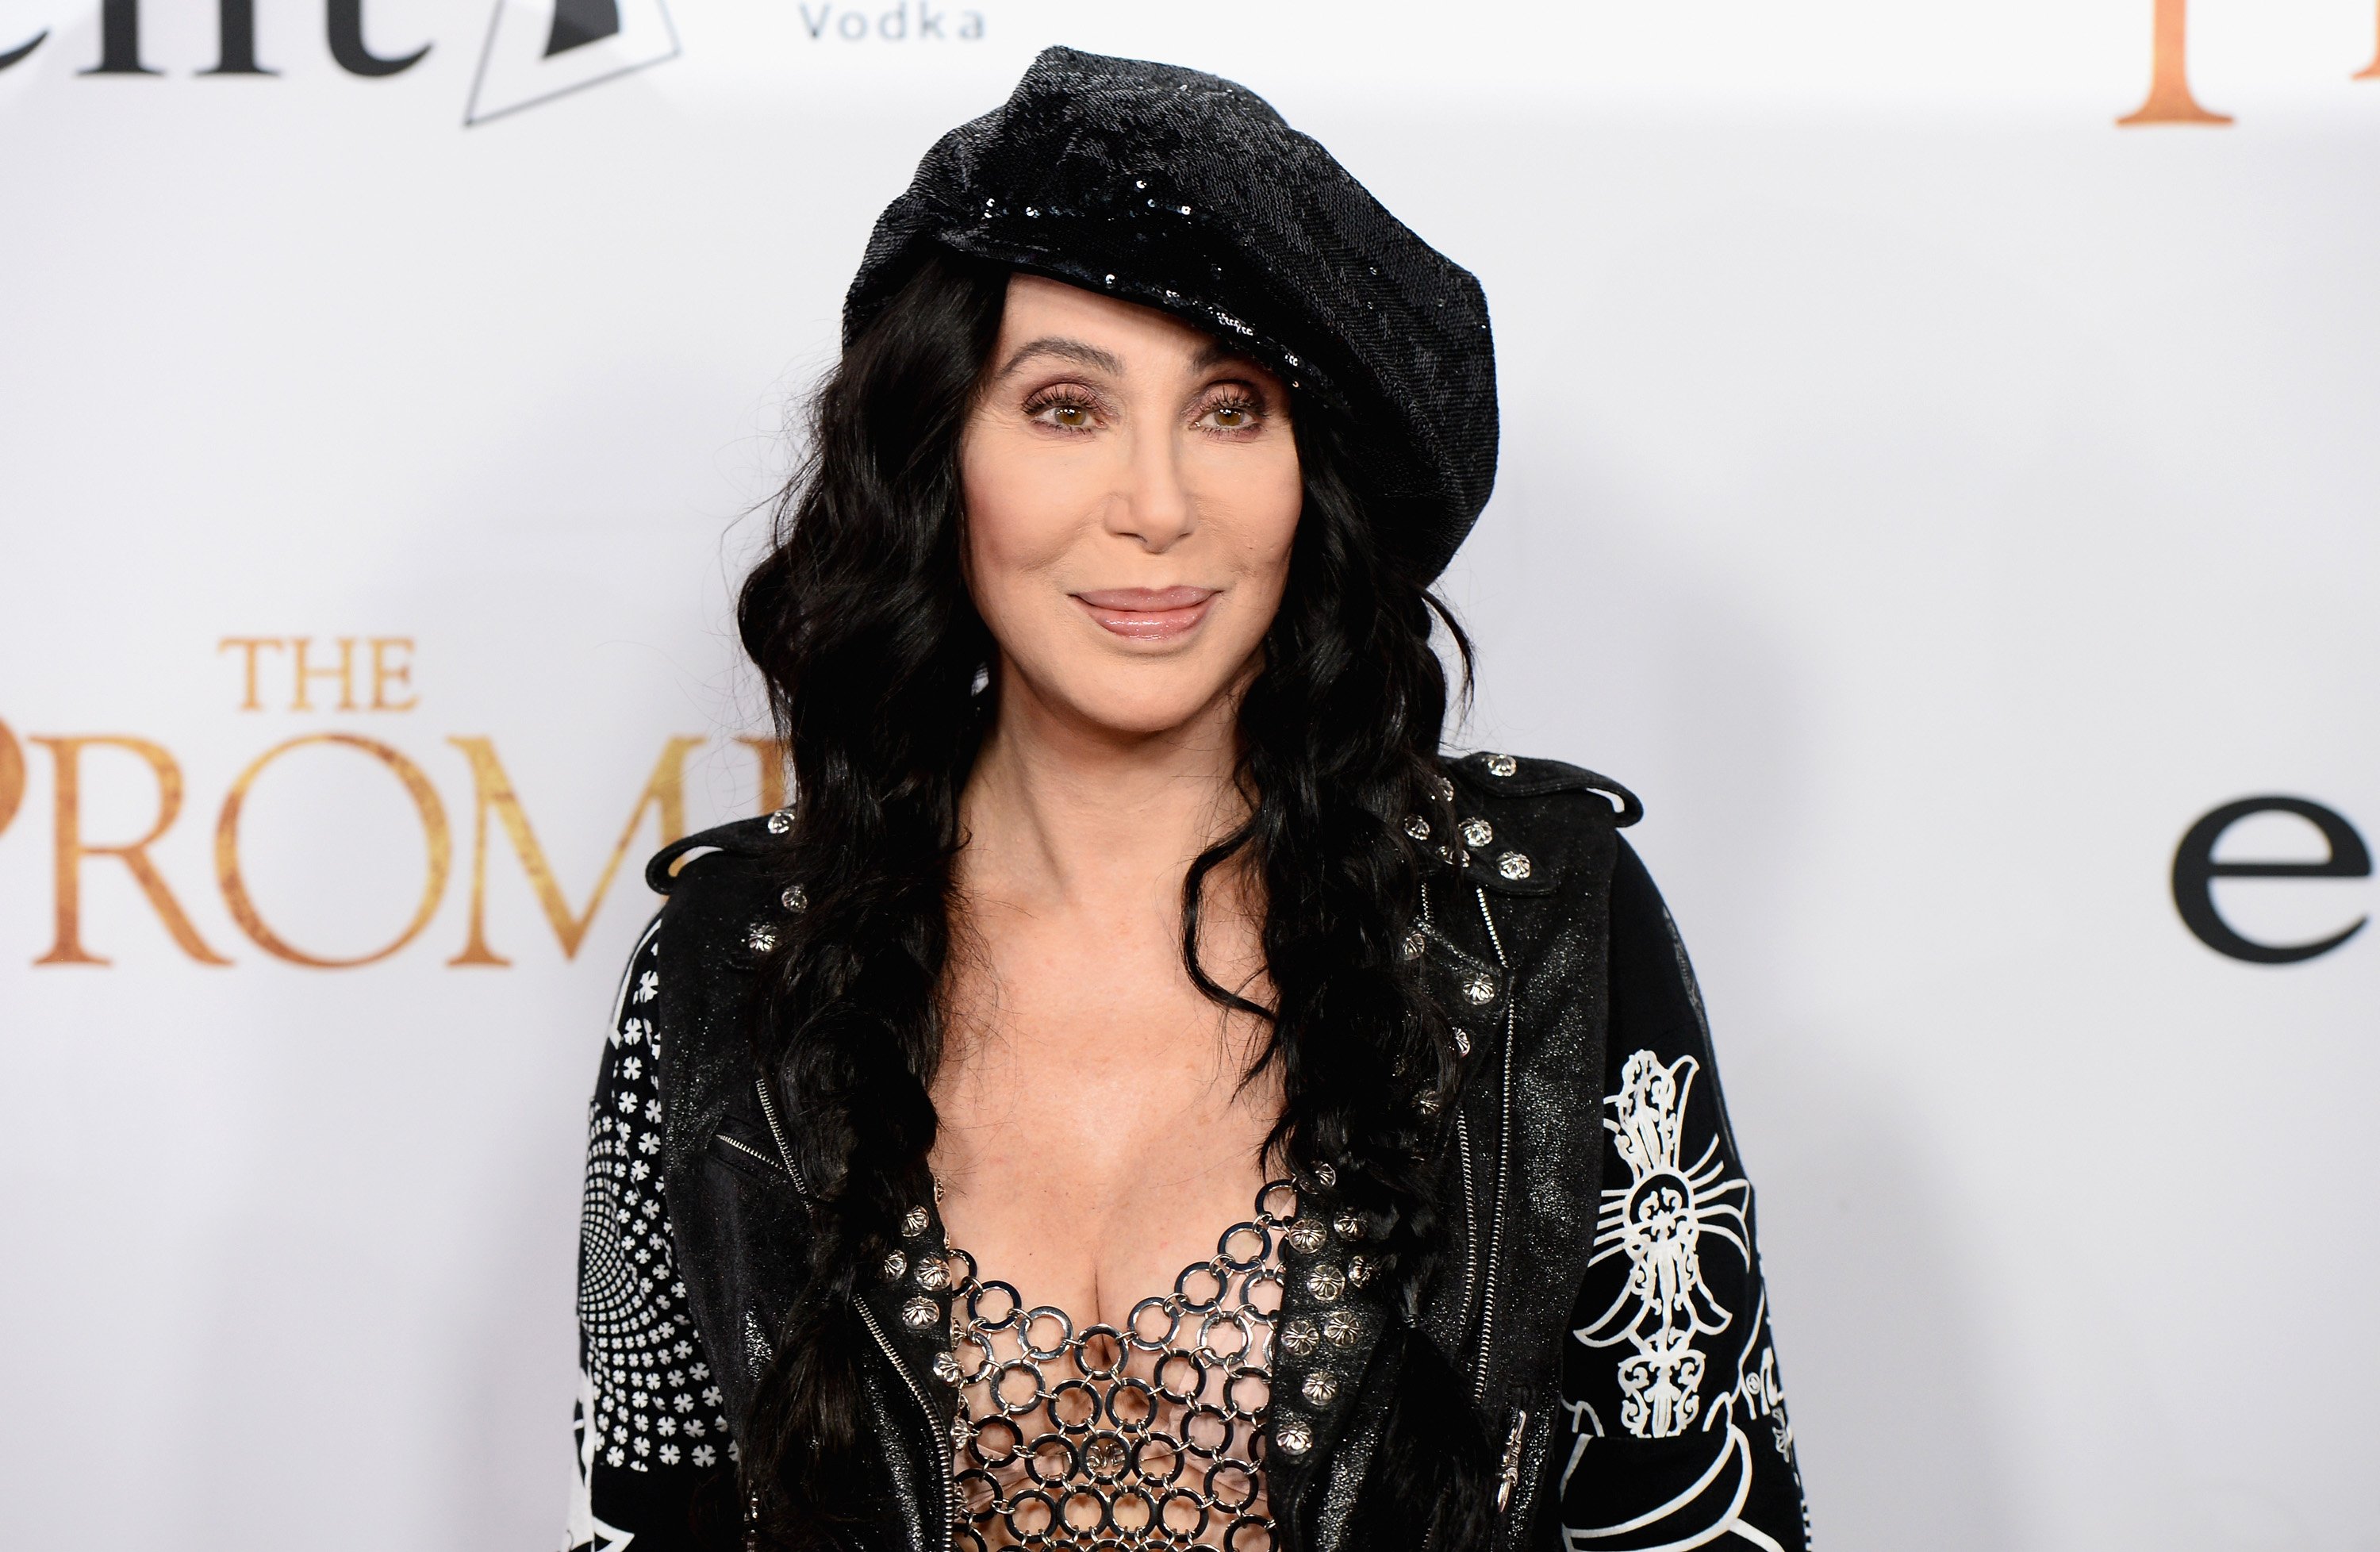 "Believe" singer Cher wearing a beret